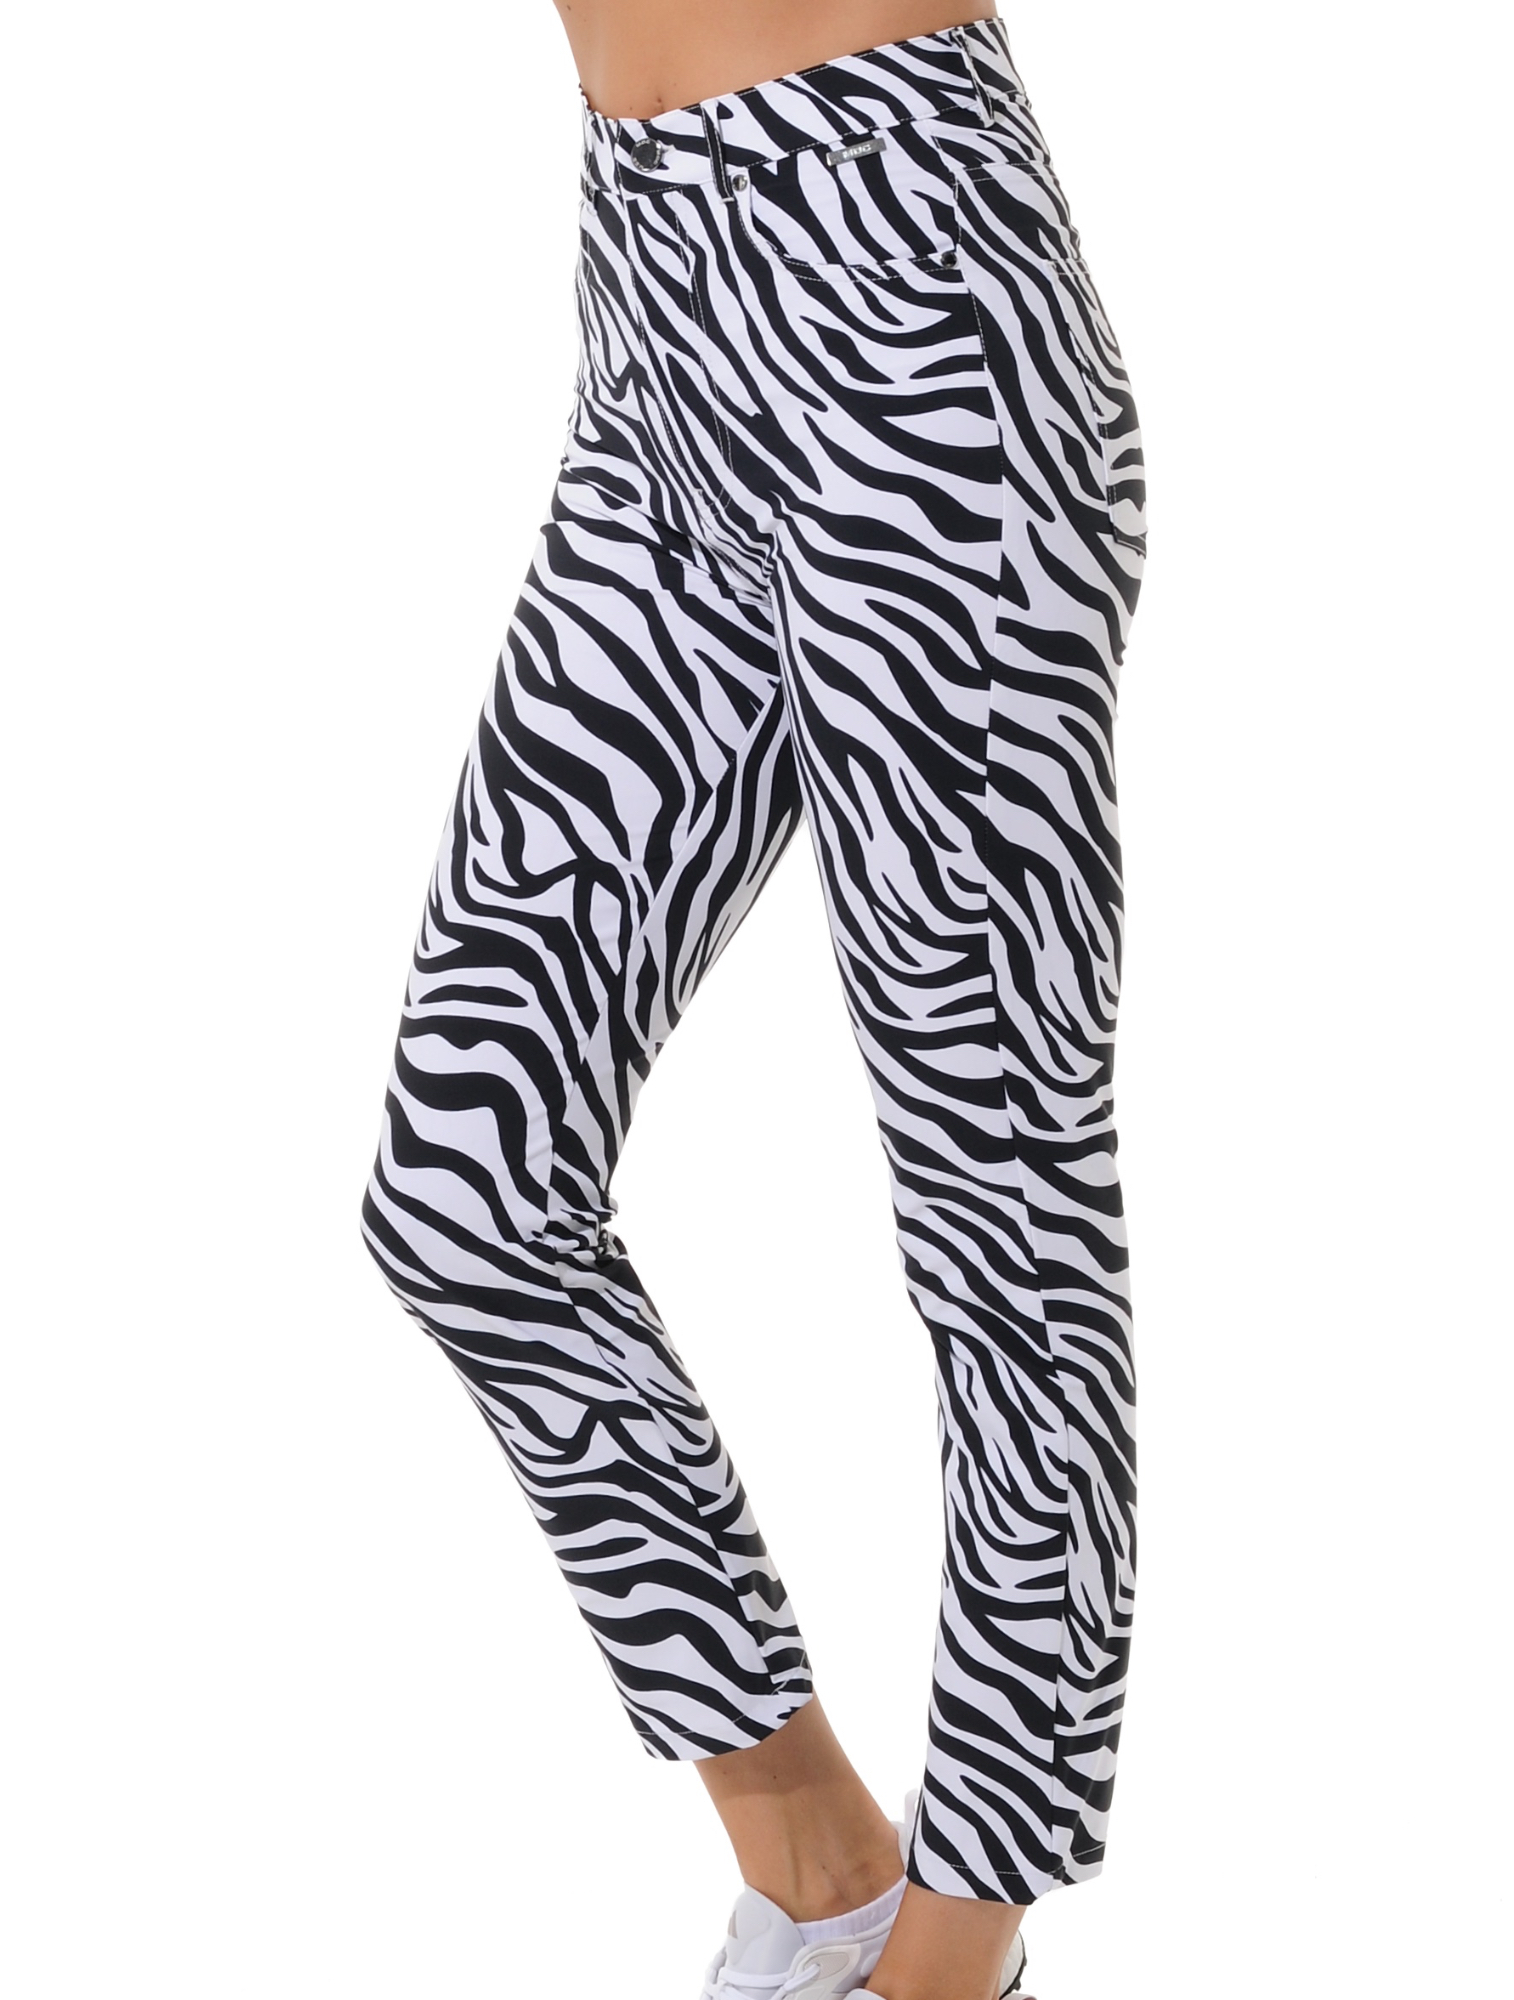 Zebra print high waist ankle pants black/white